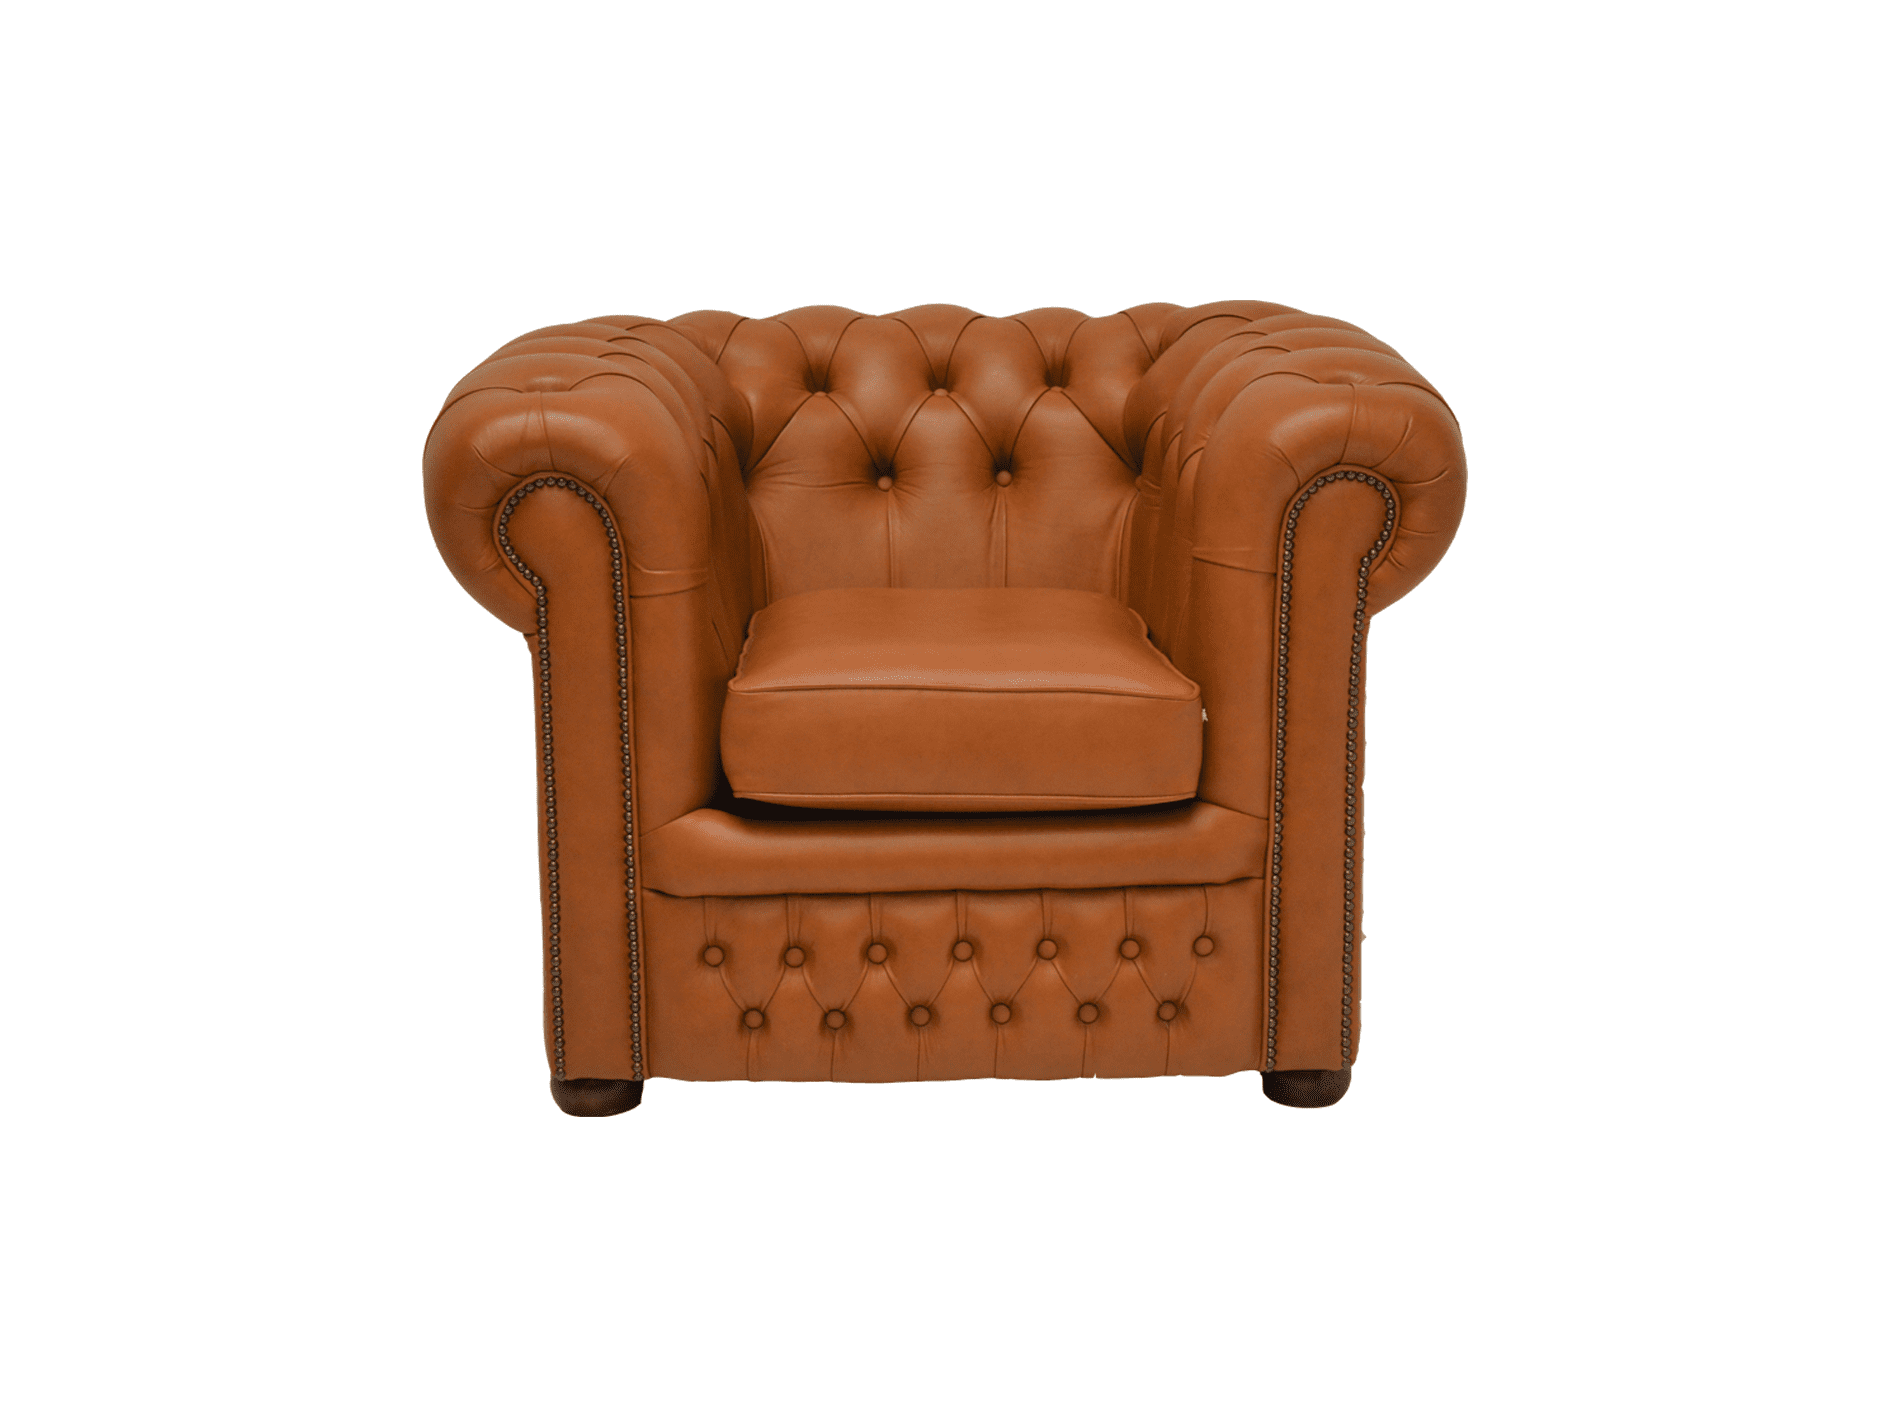 Gebruikte cognac kleurige Burnley chesterfield stoel